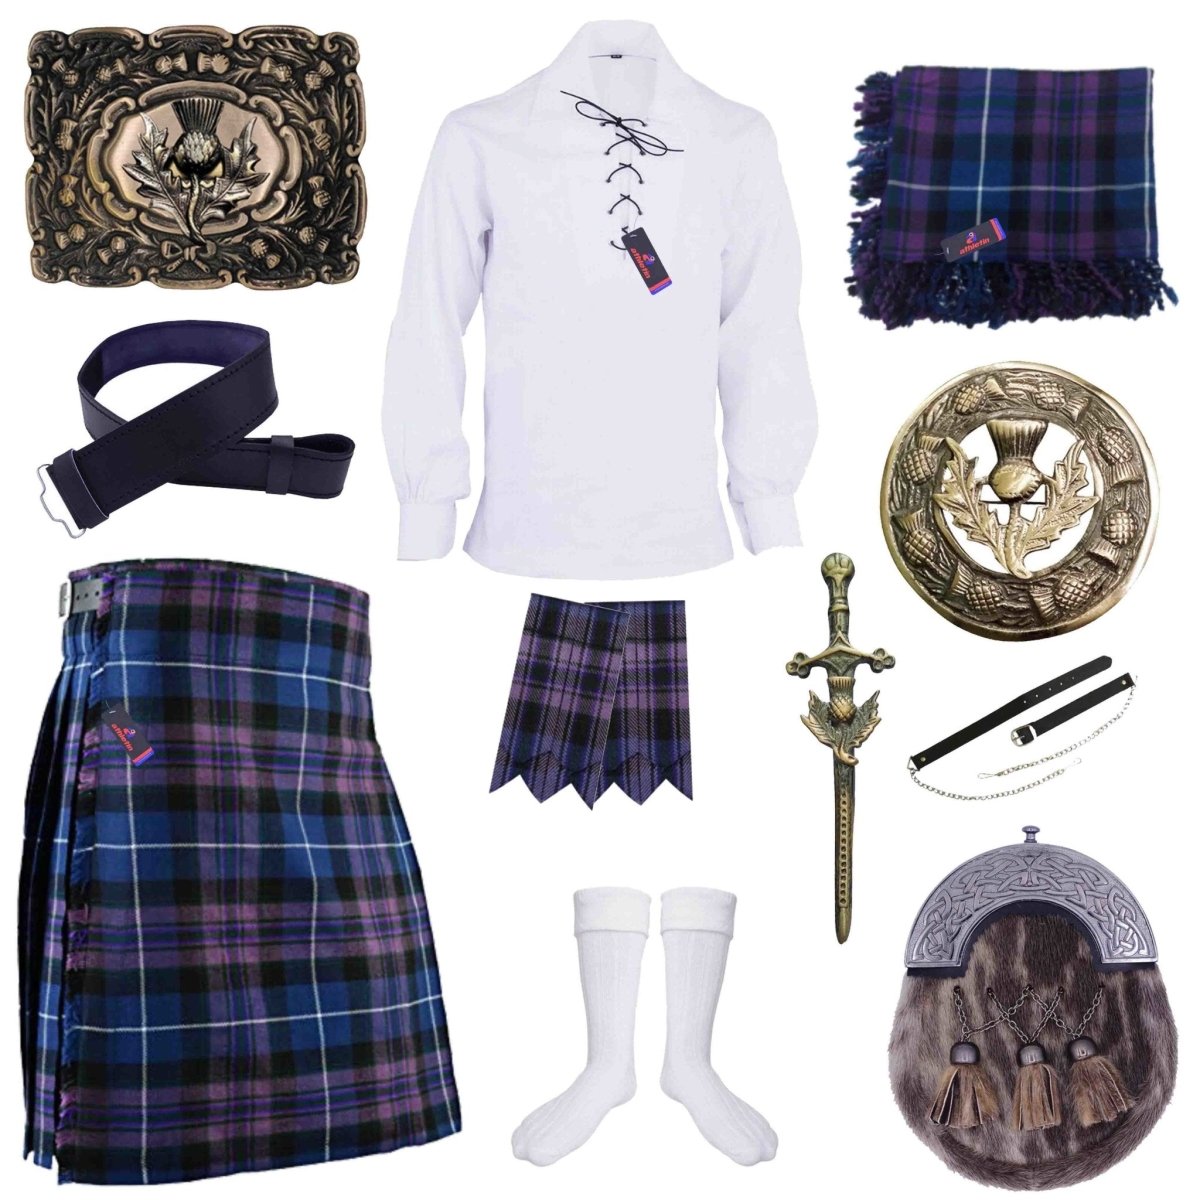 Pride of Scotland Tartan Highland Kilt Outfit